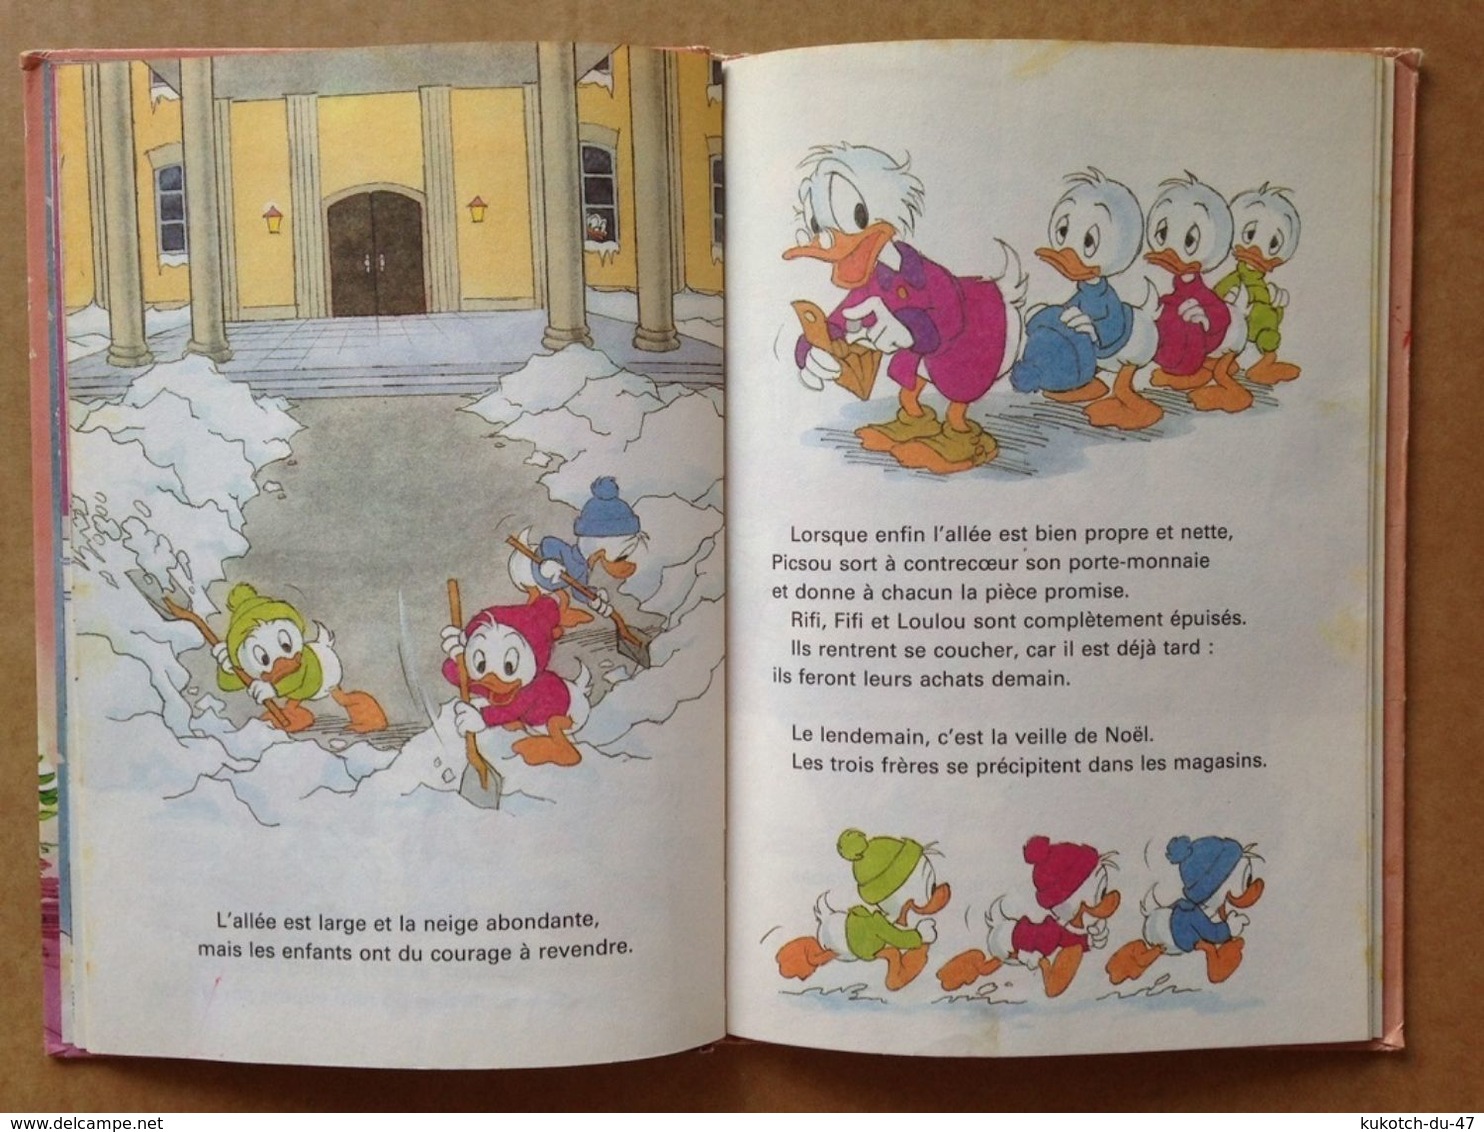 Disney - Mickey Club du livre - Joyeux Noël, oncle Picsou ! (1983)